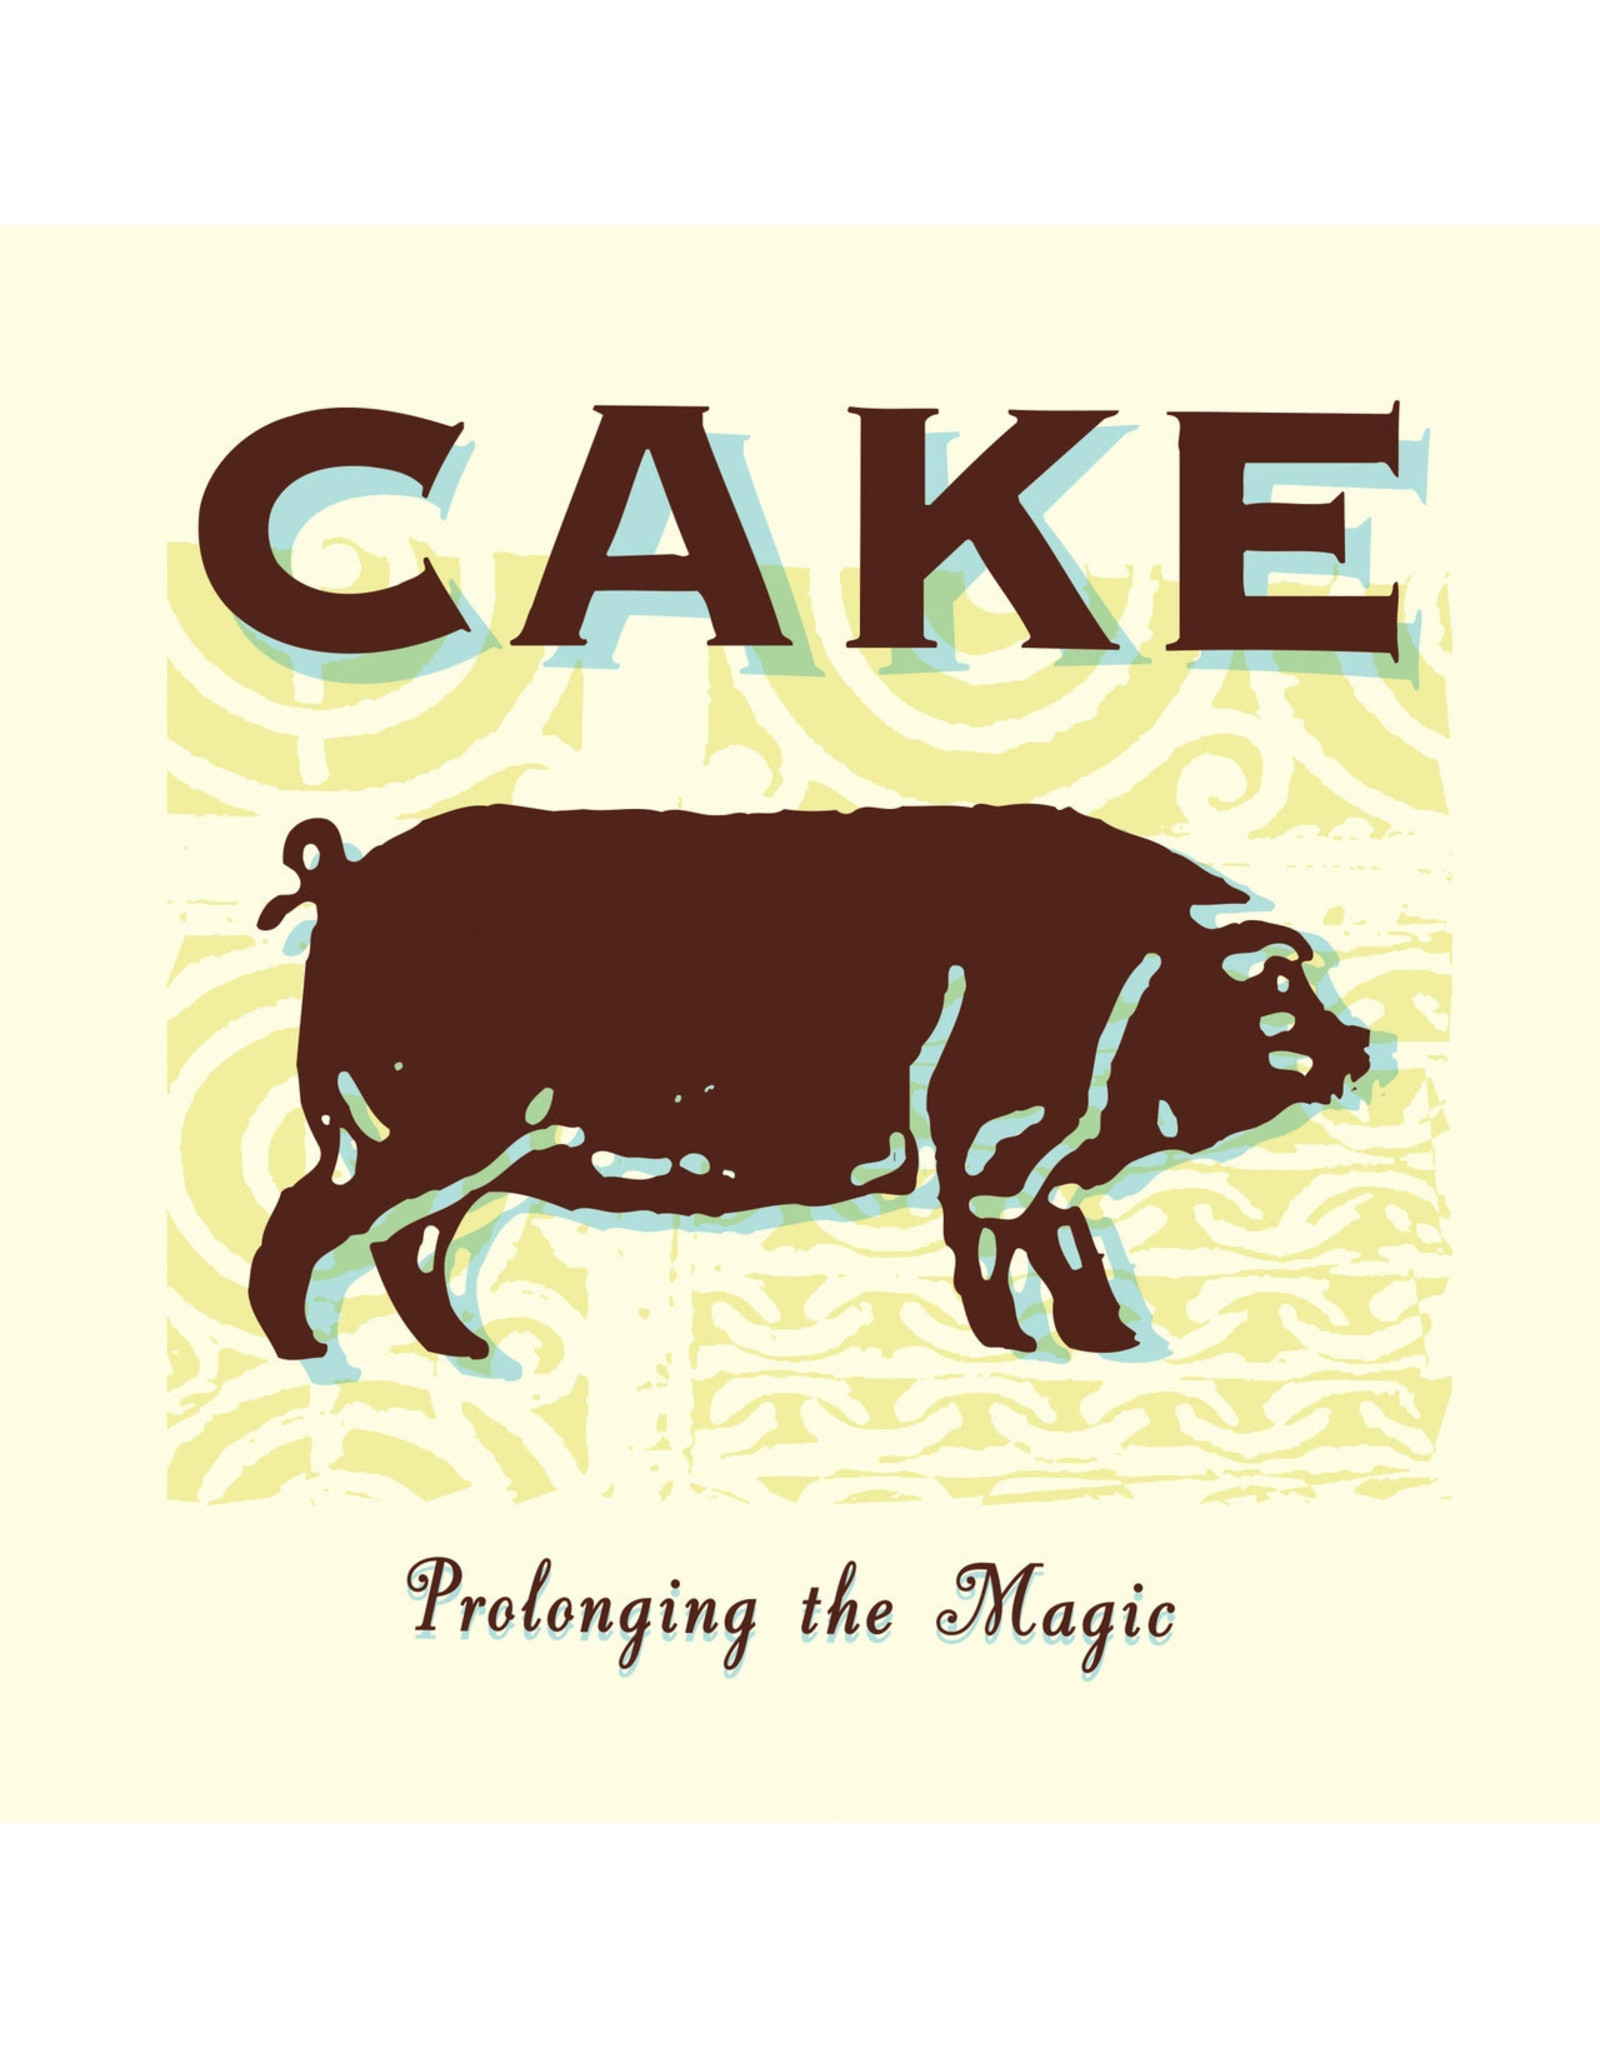 Legacy Cake: Prolonging the Magic LP